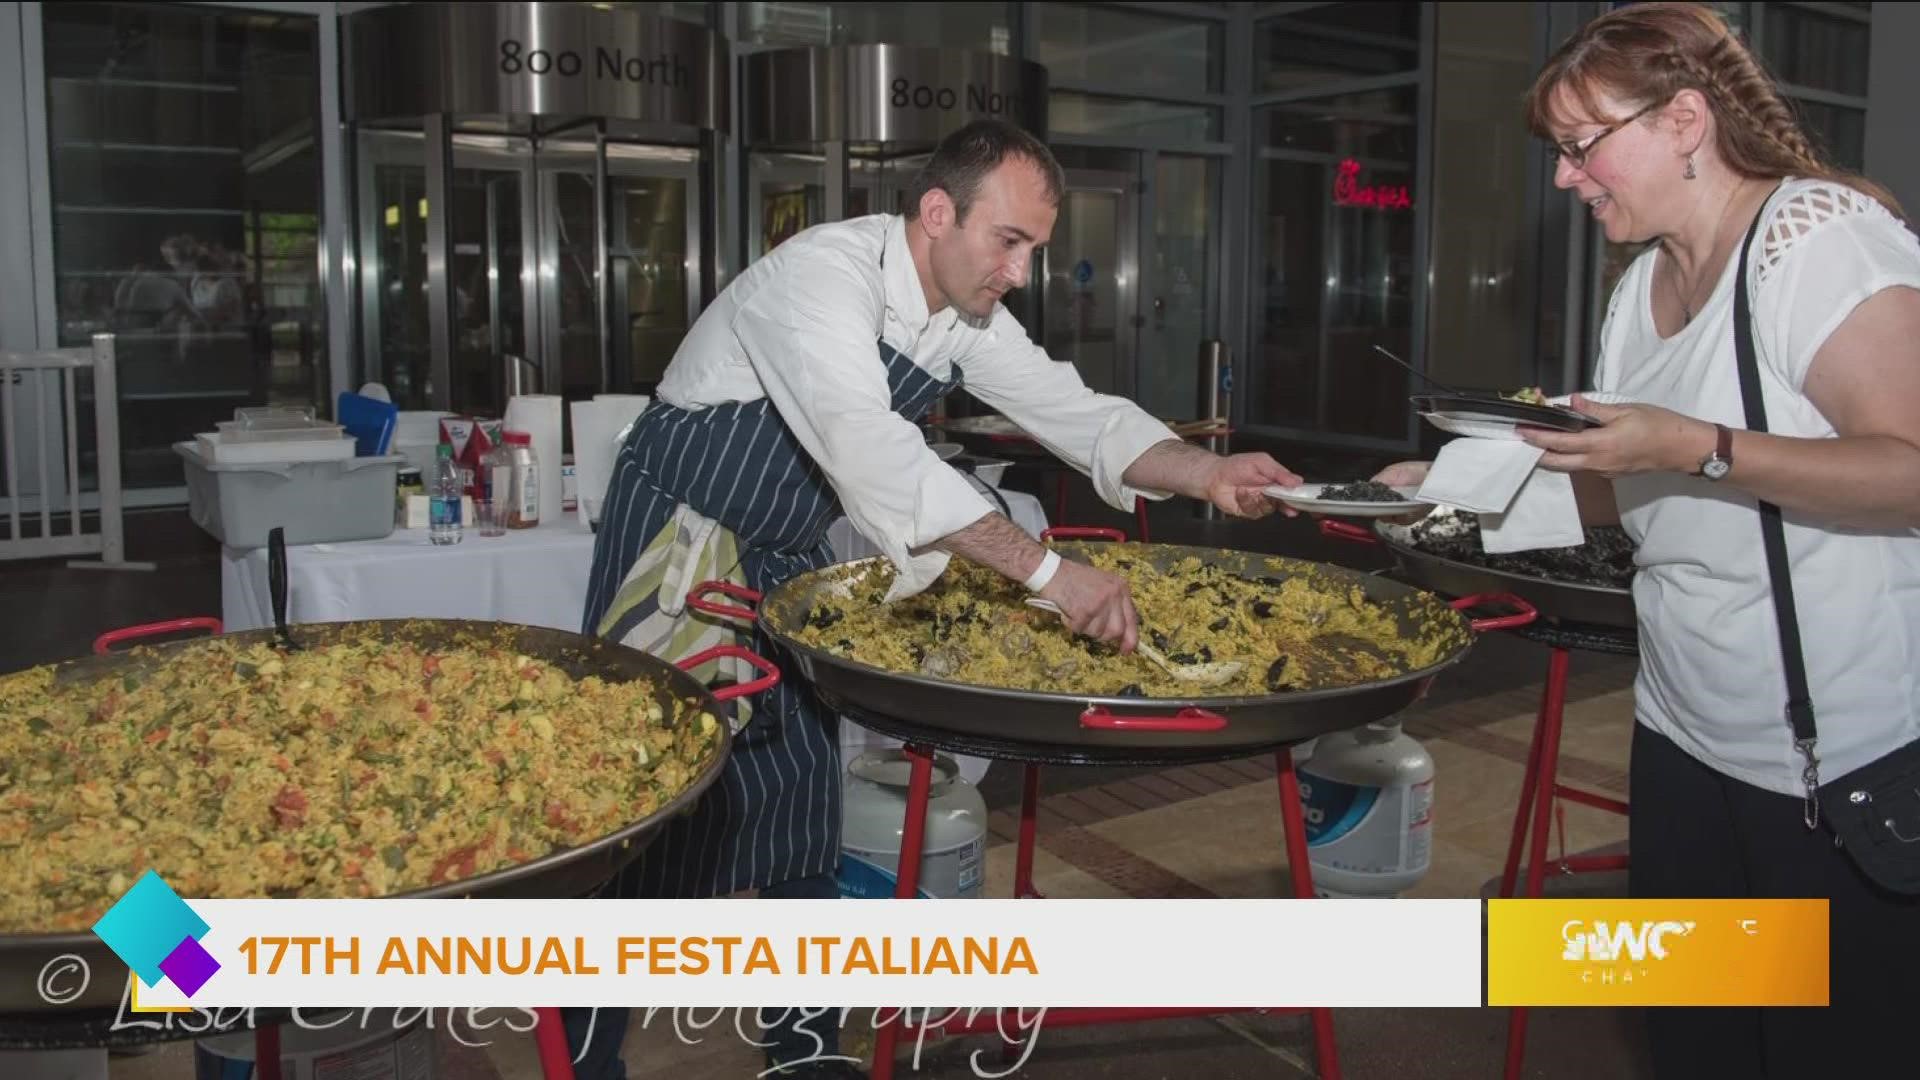 Food, fun and family at the Festa Italiana